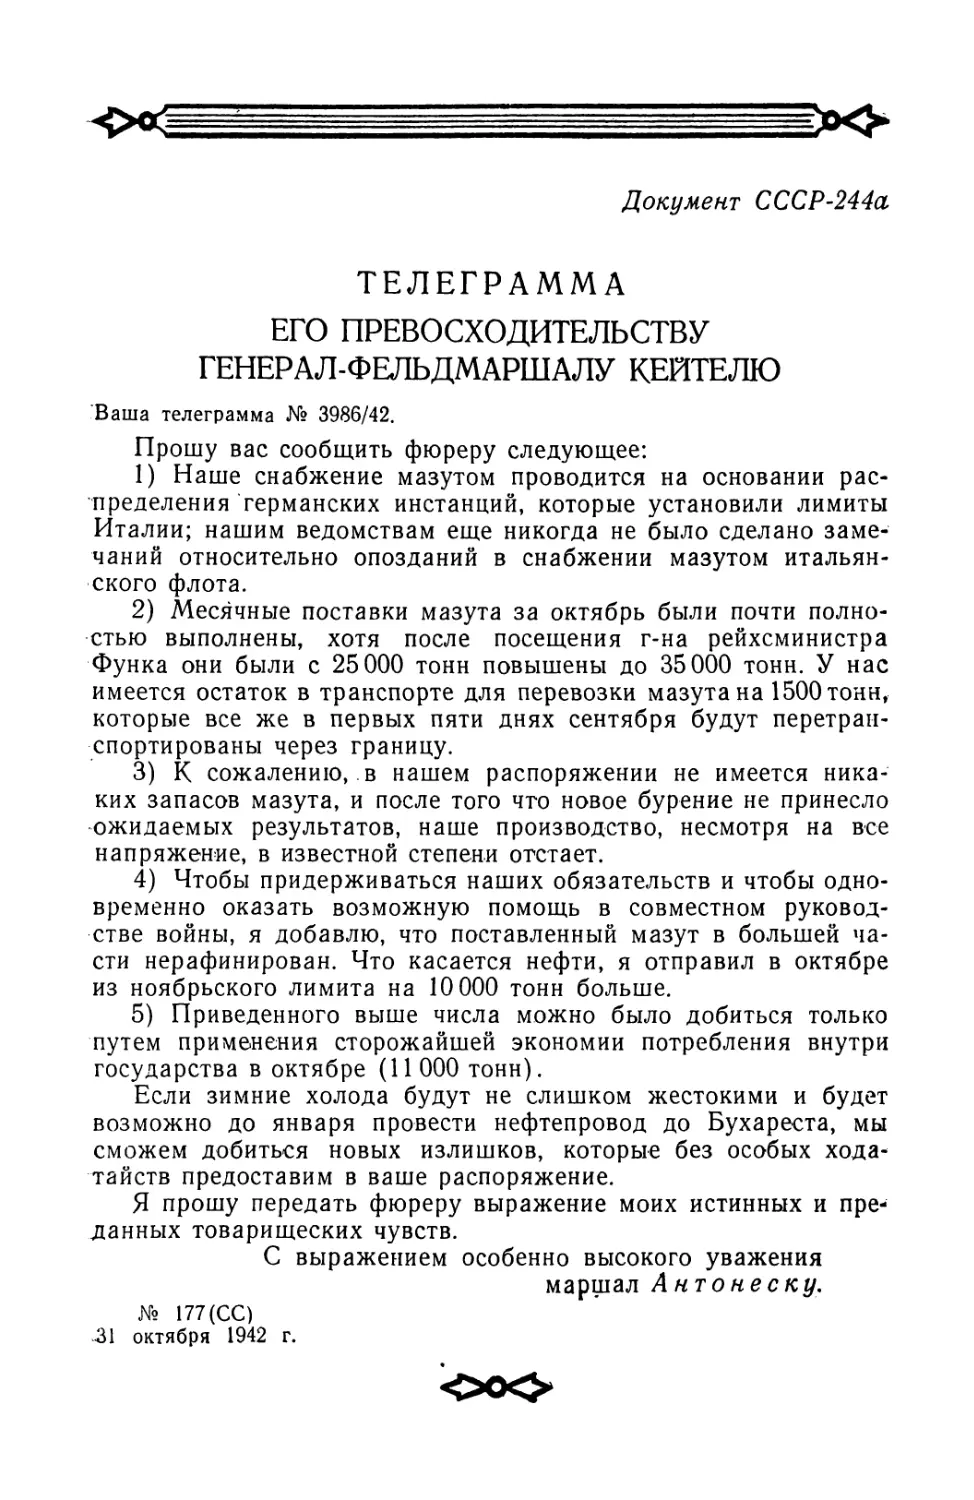 Телеграмма Антонеску Кейтелю от 31 октября 1942 г.